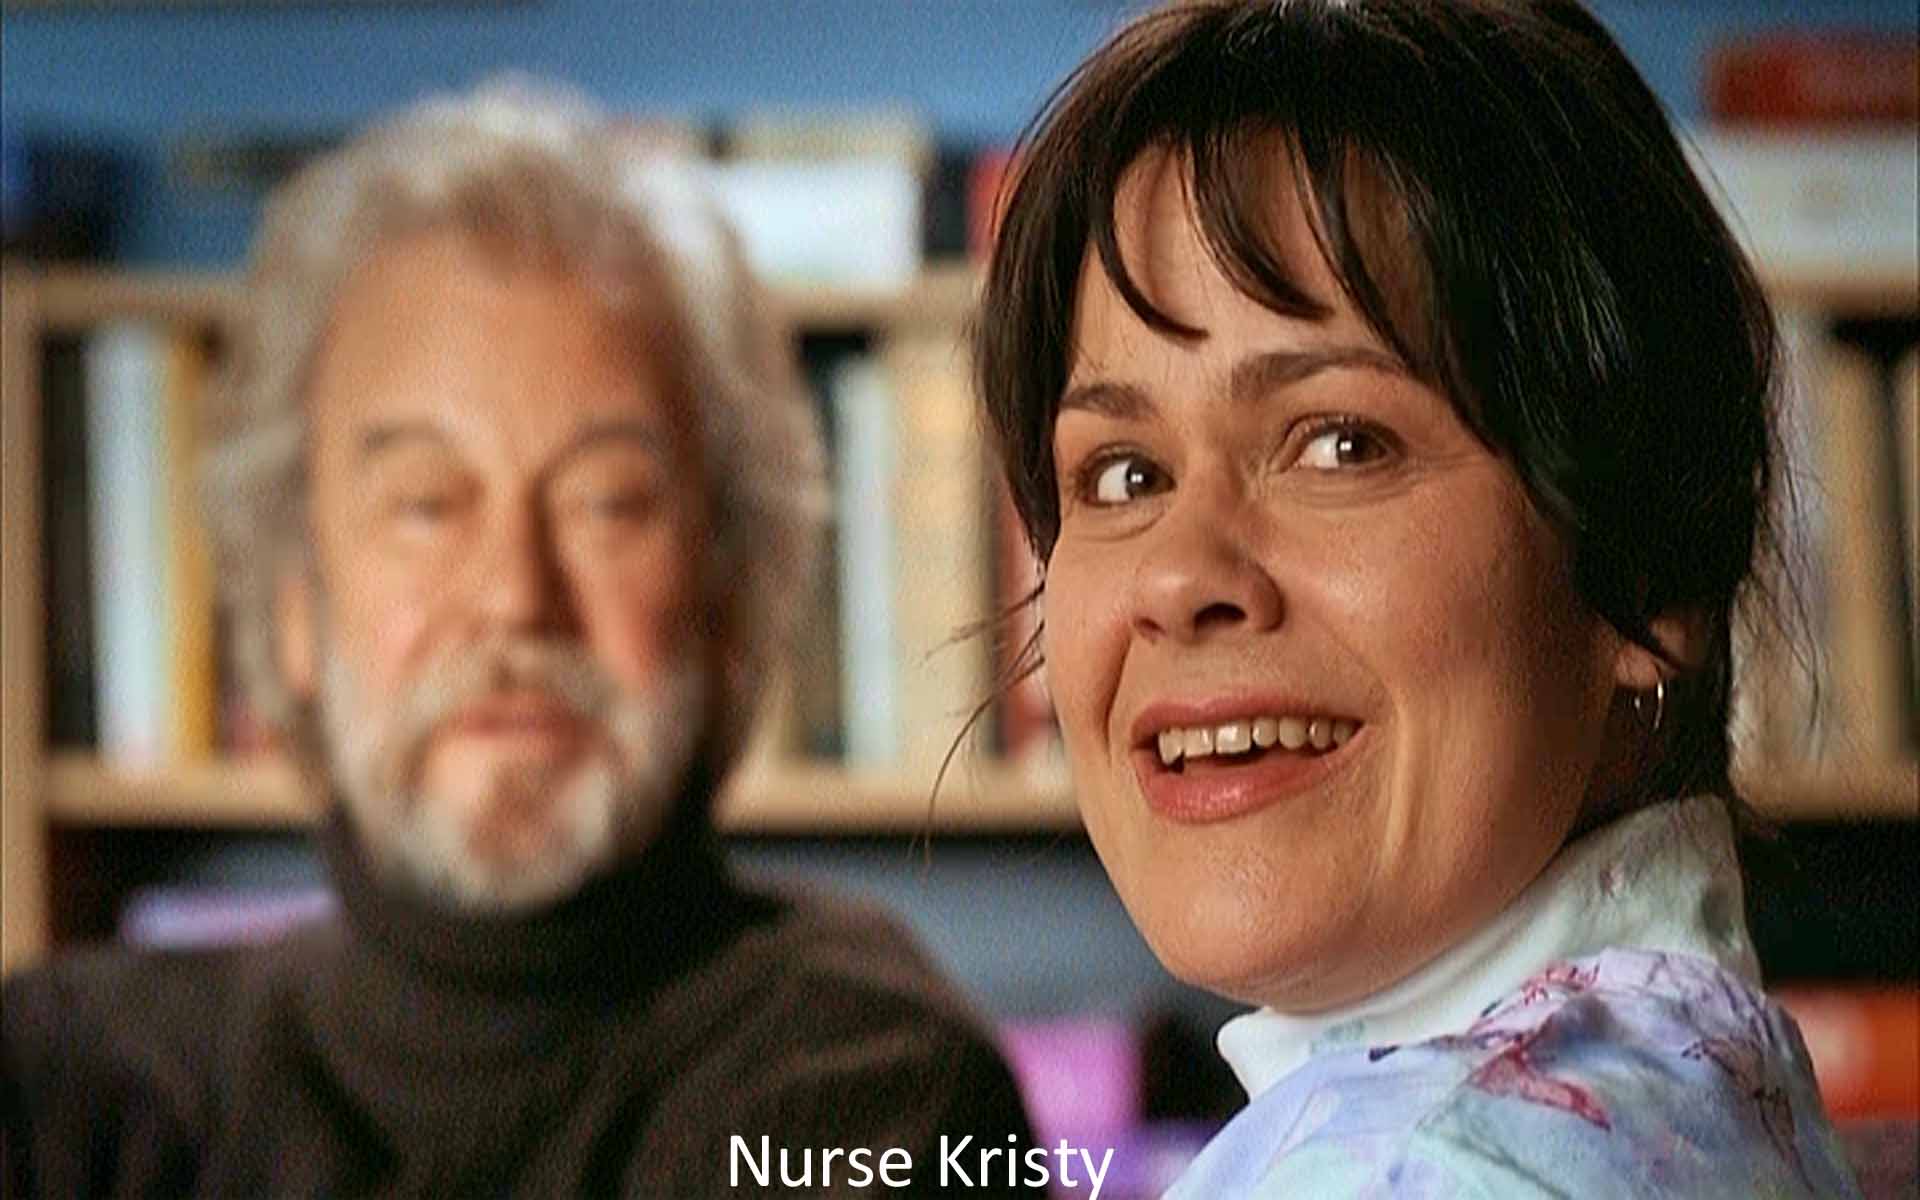 Nurse Kristy